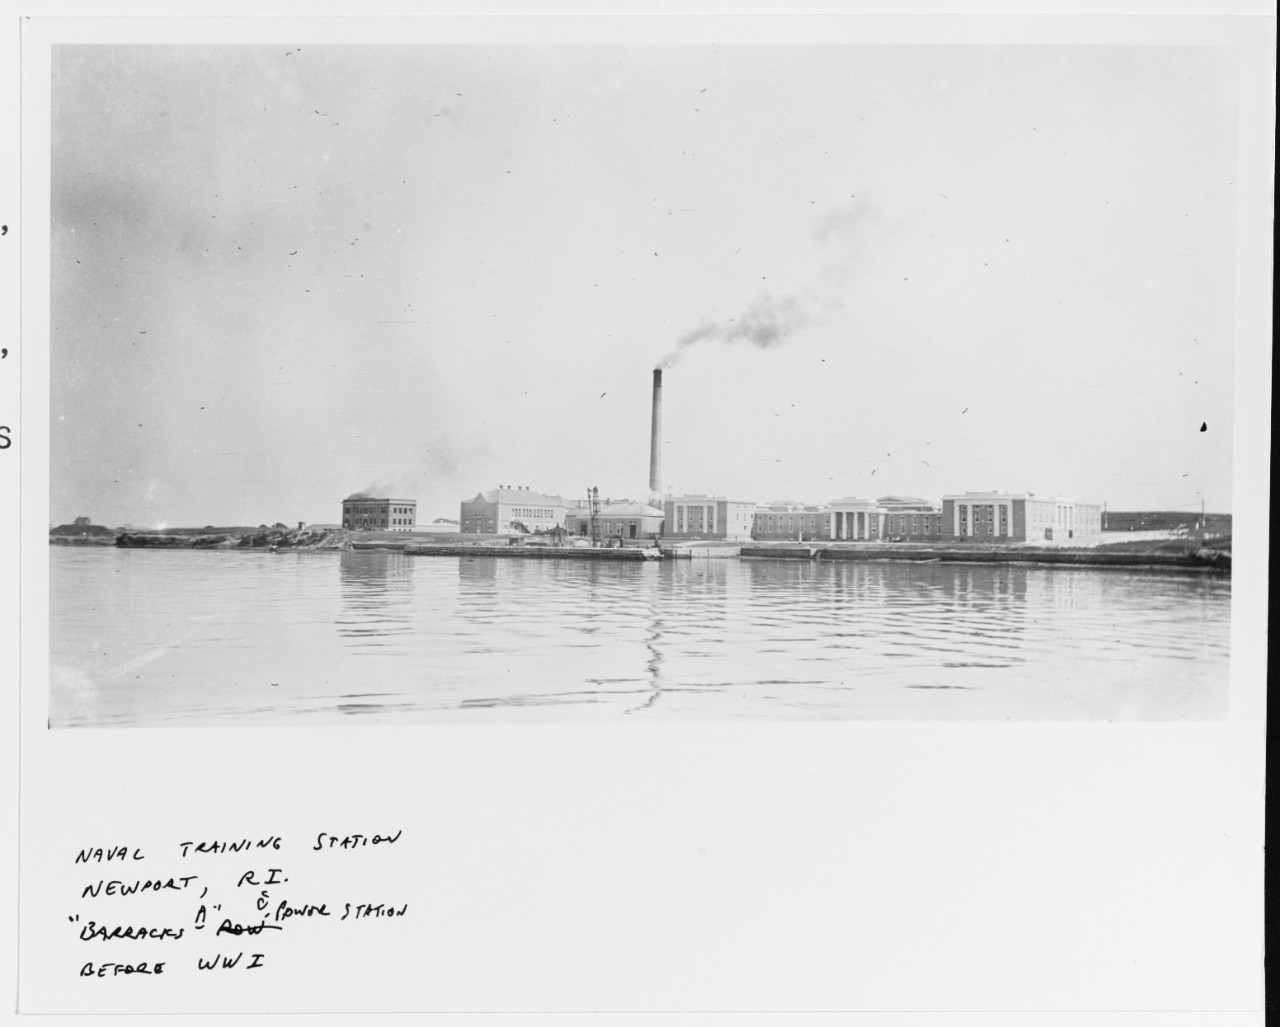 Naval Torpedo Station, Newport, R.I.